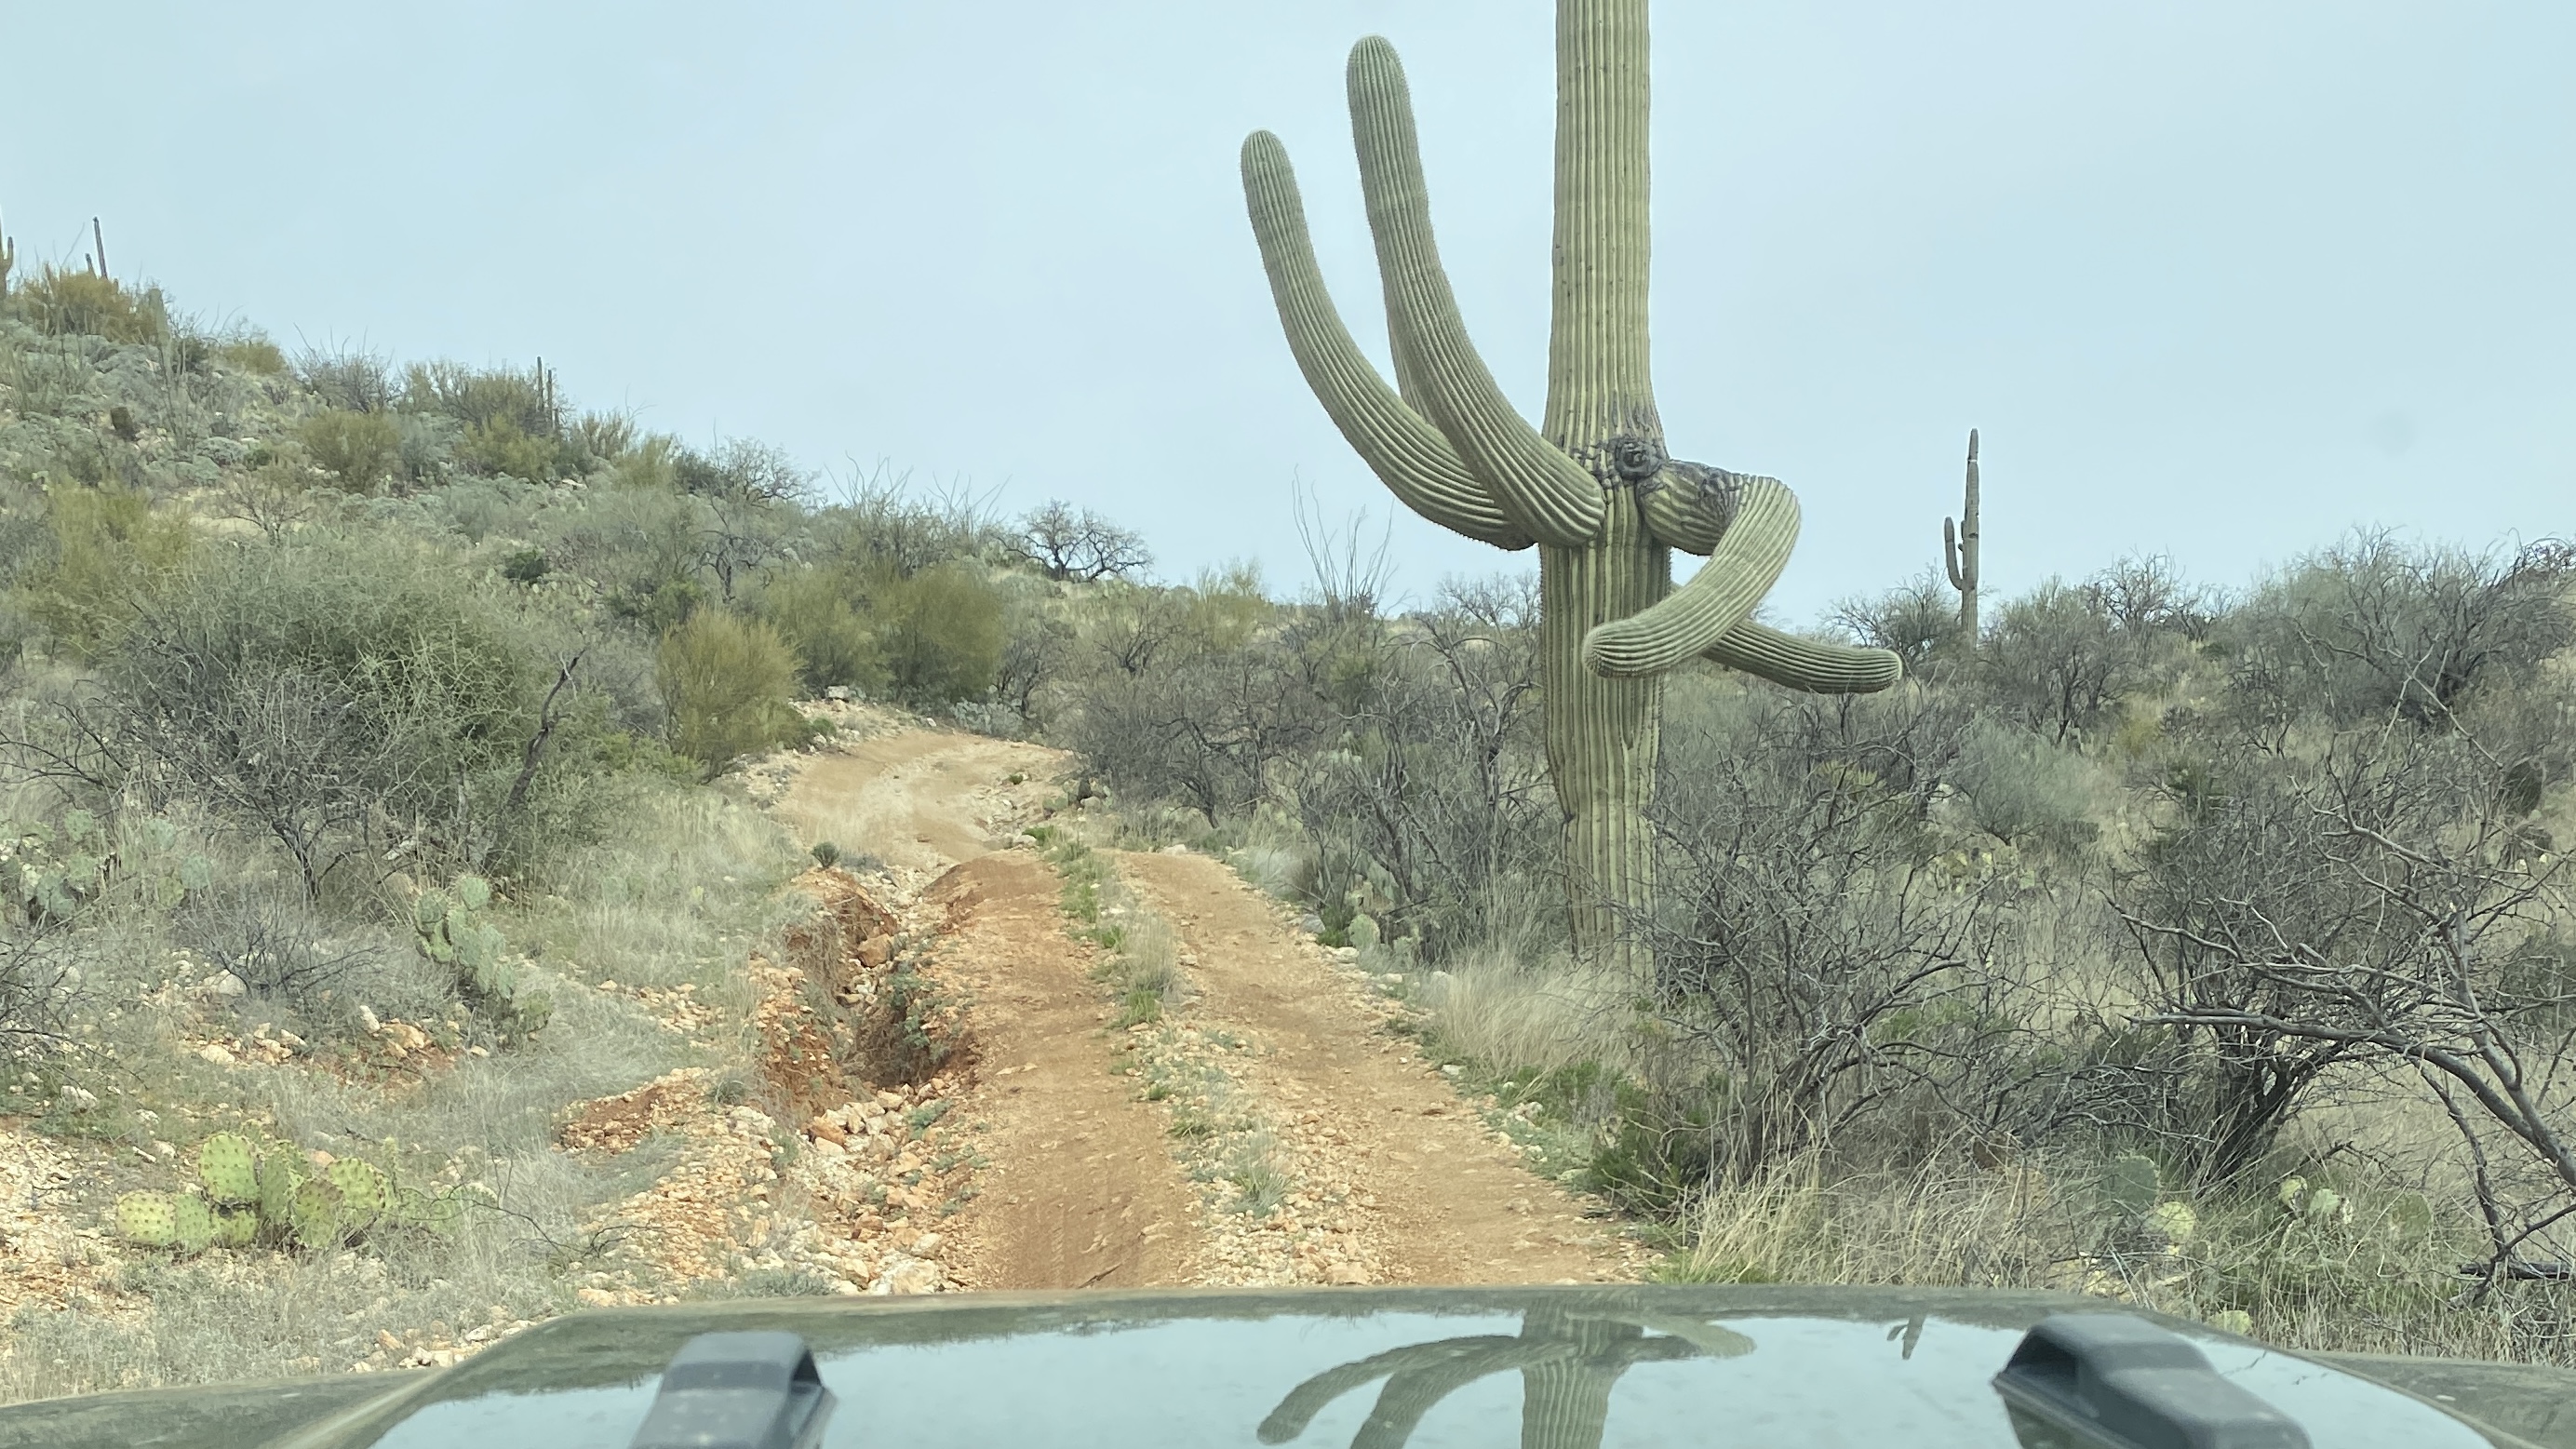 Jeep Gladiator Aravaipa Canyon, AZ with Gladiator Mojave and trailer in tow 5BAC5515-9B7C-4A14-BA66-0DAD3A3F47B4